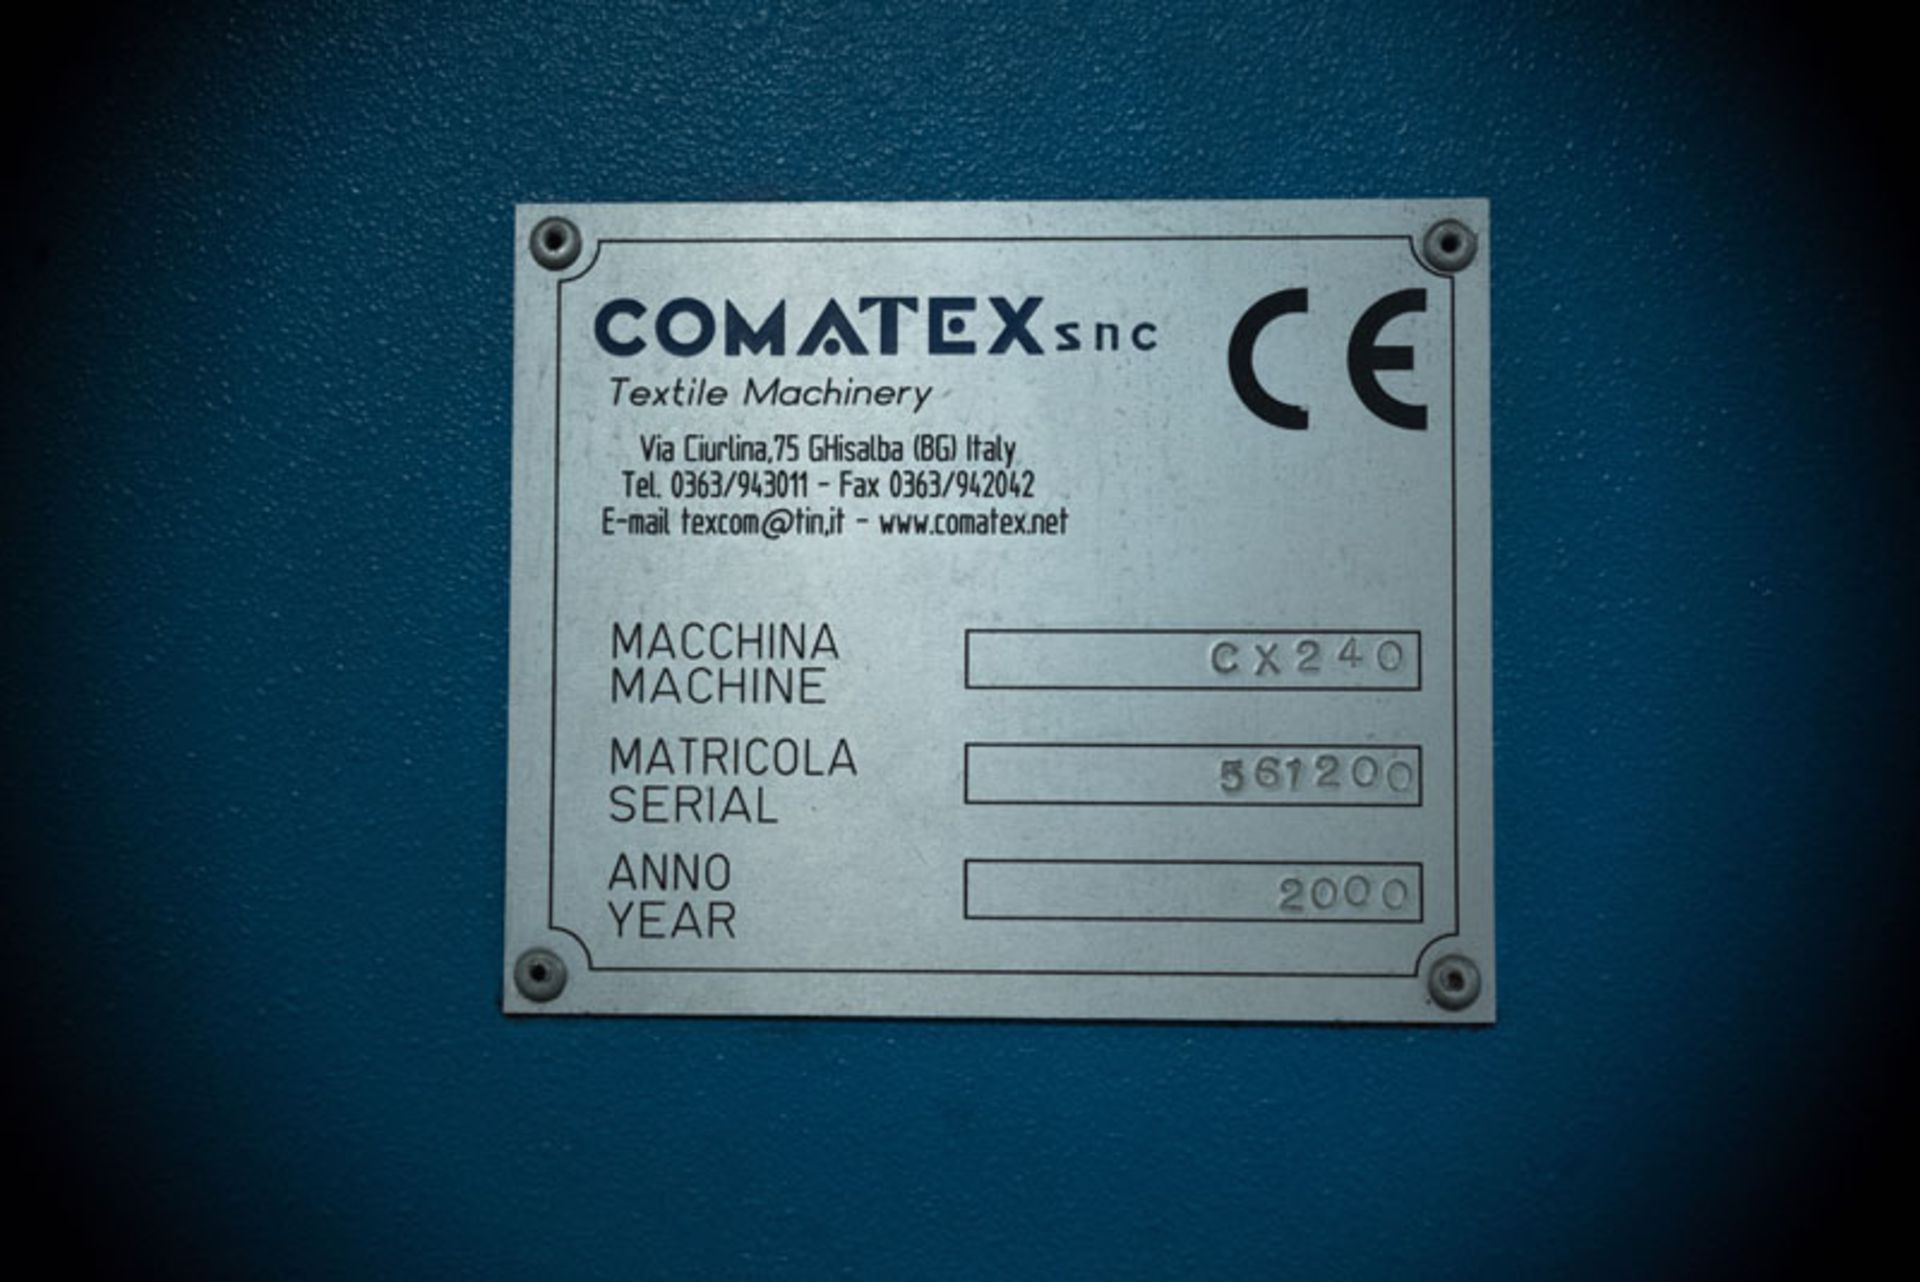 Comatex Tacking Machine Model CX240 SER#541200 Year 2000 w/ Rimoldi 264-04-1MB-04 Sewing Head - Image 6 of 8